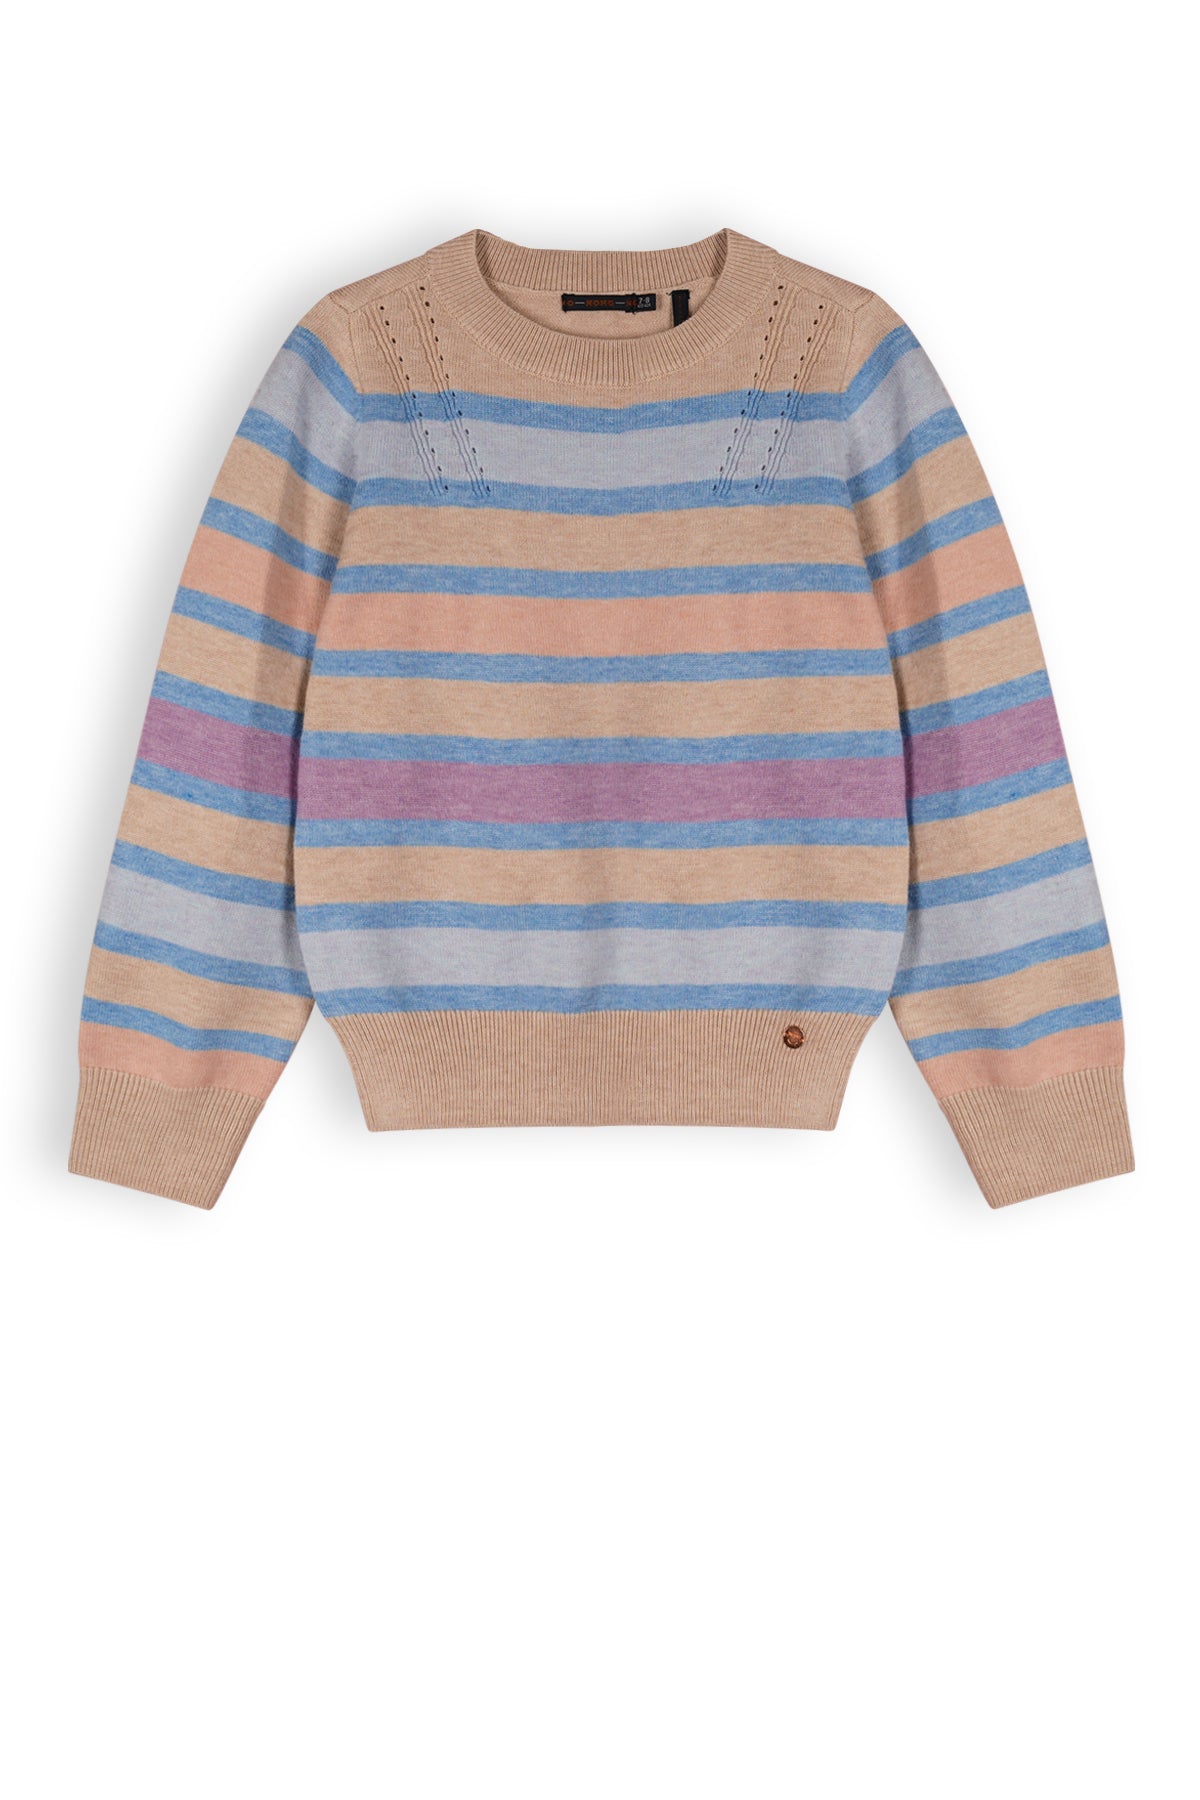 NoNo K-Soft Girls Striped Knitted Sweater Sand